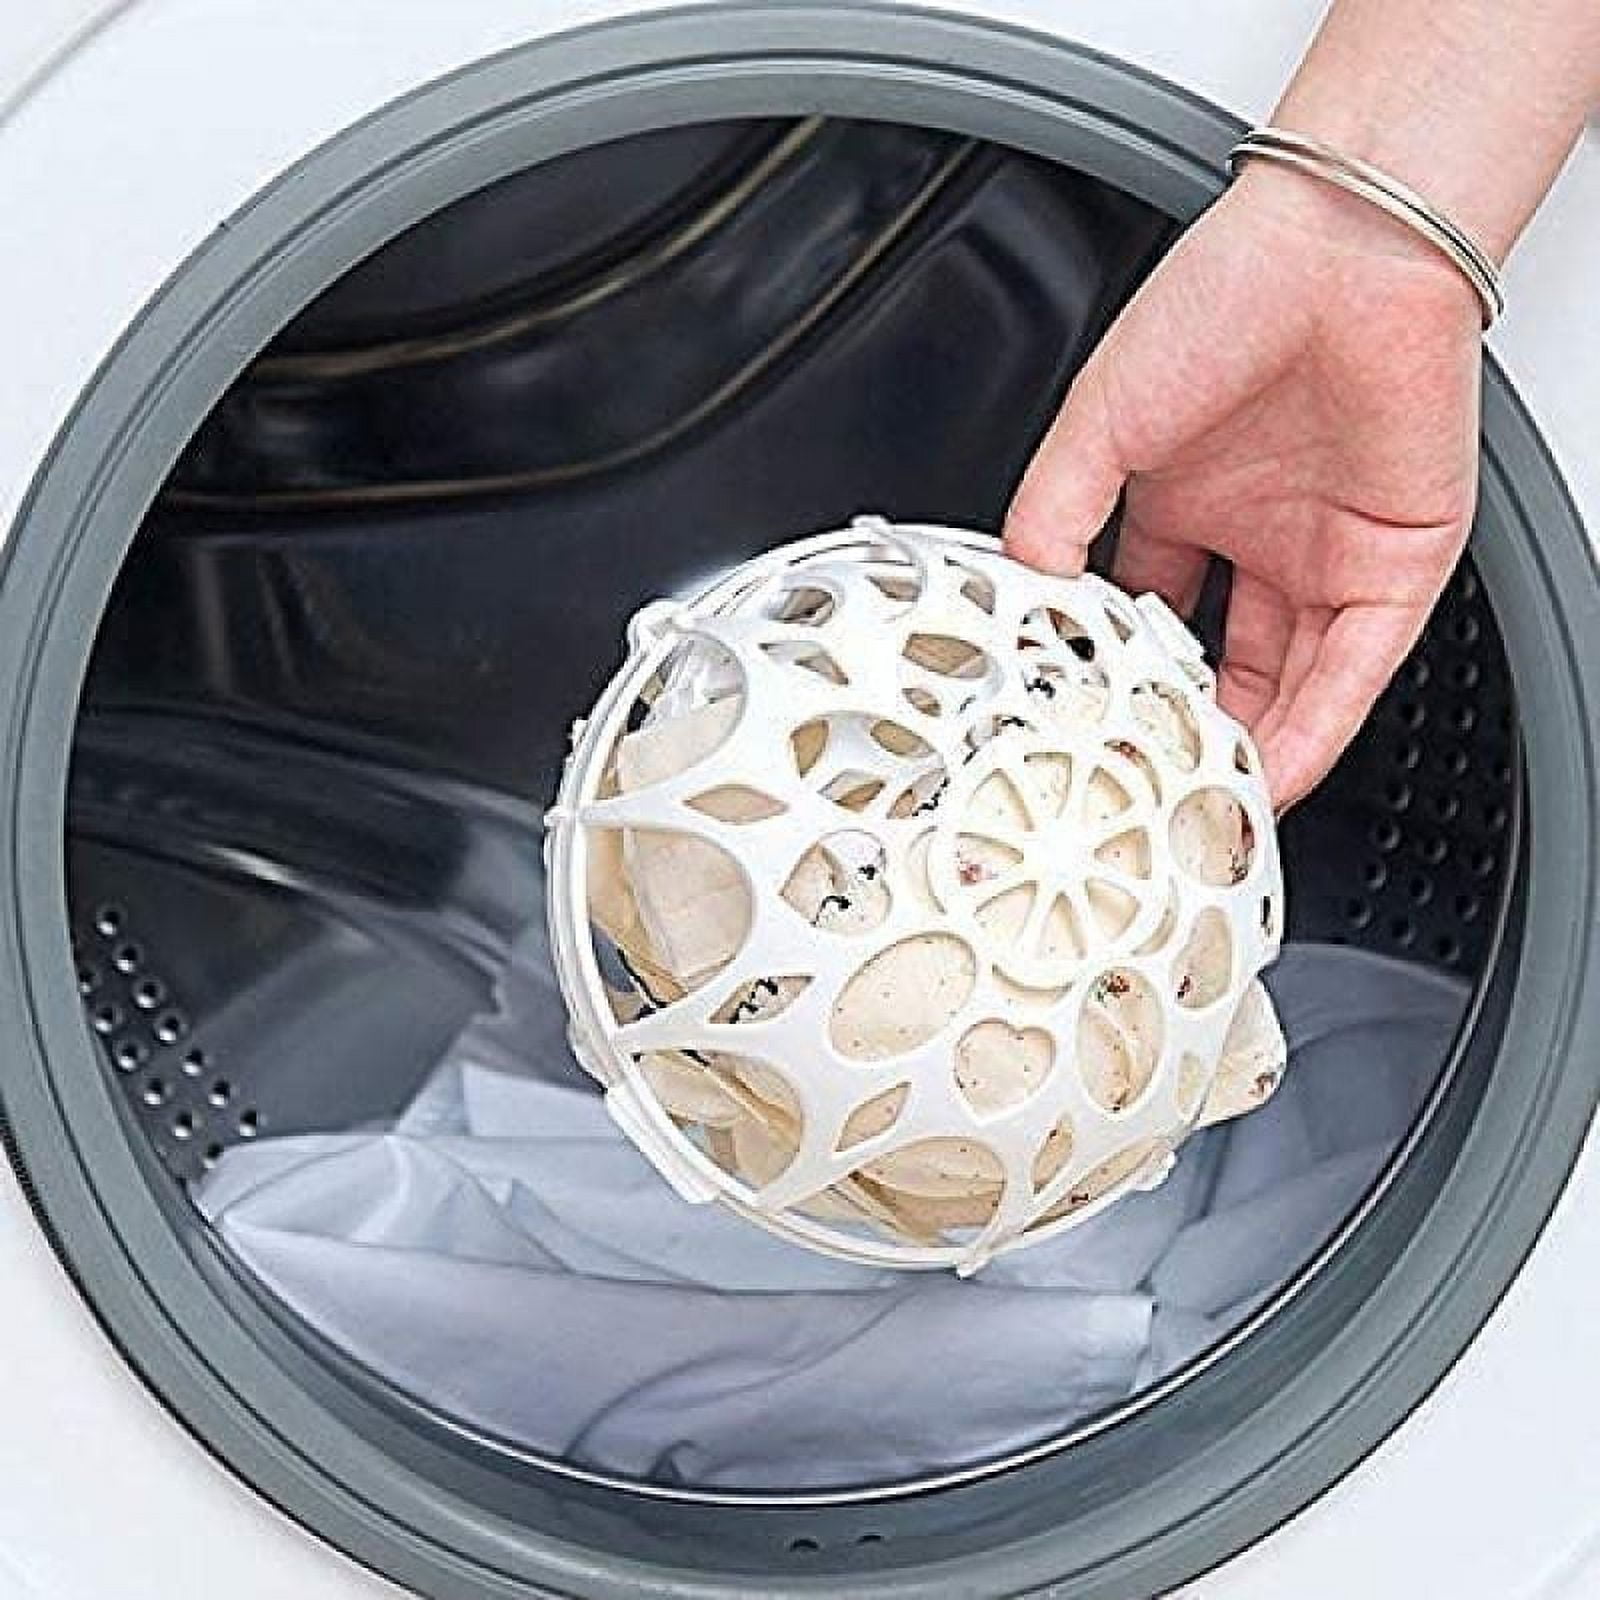 Bra Laundry Net Laundry Bag Bra Washing Kit Bra Protector